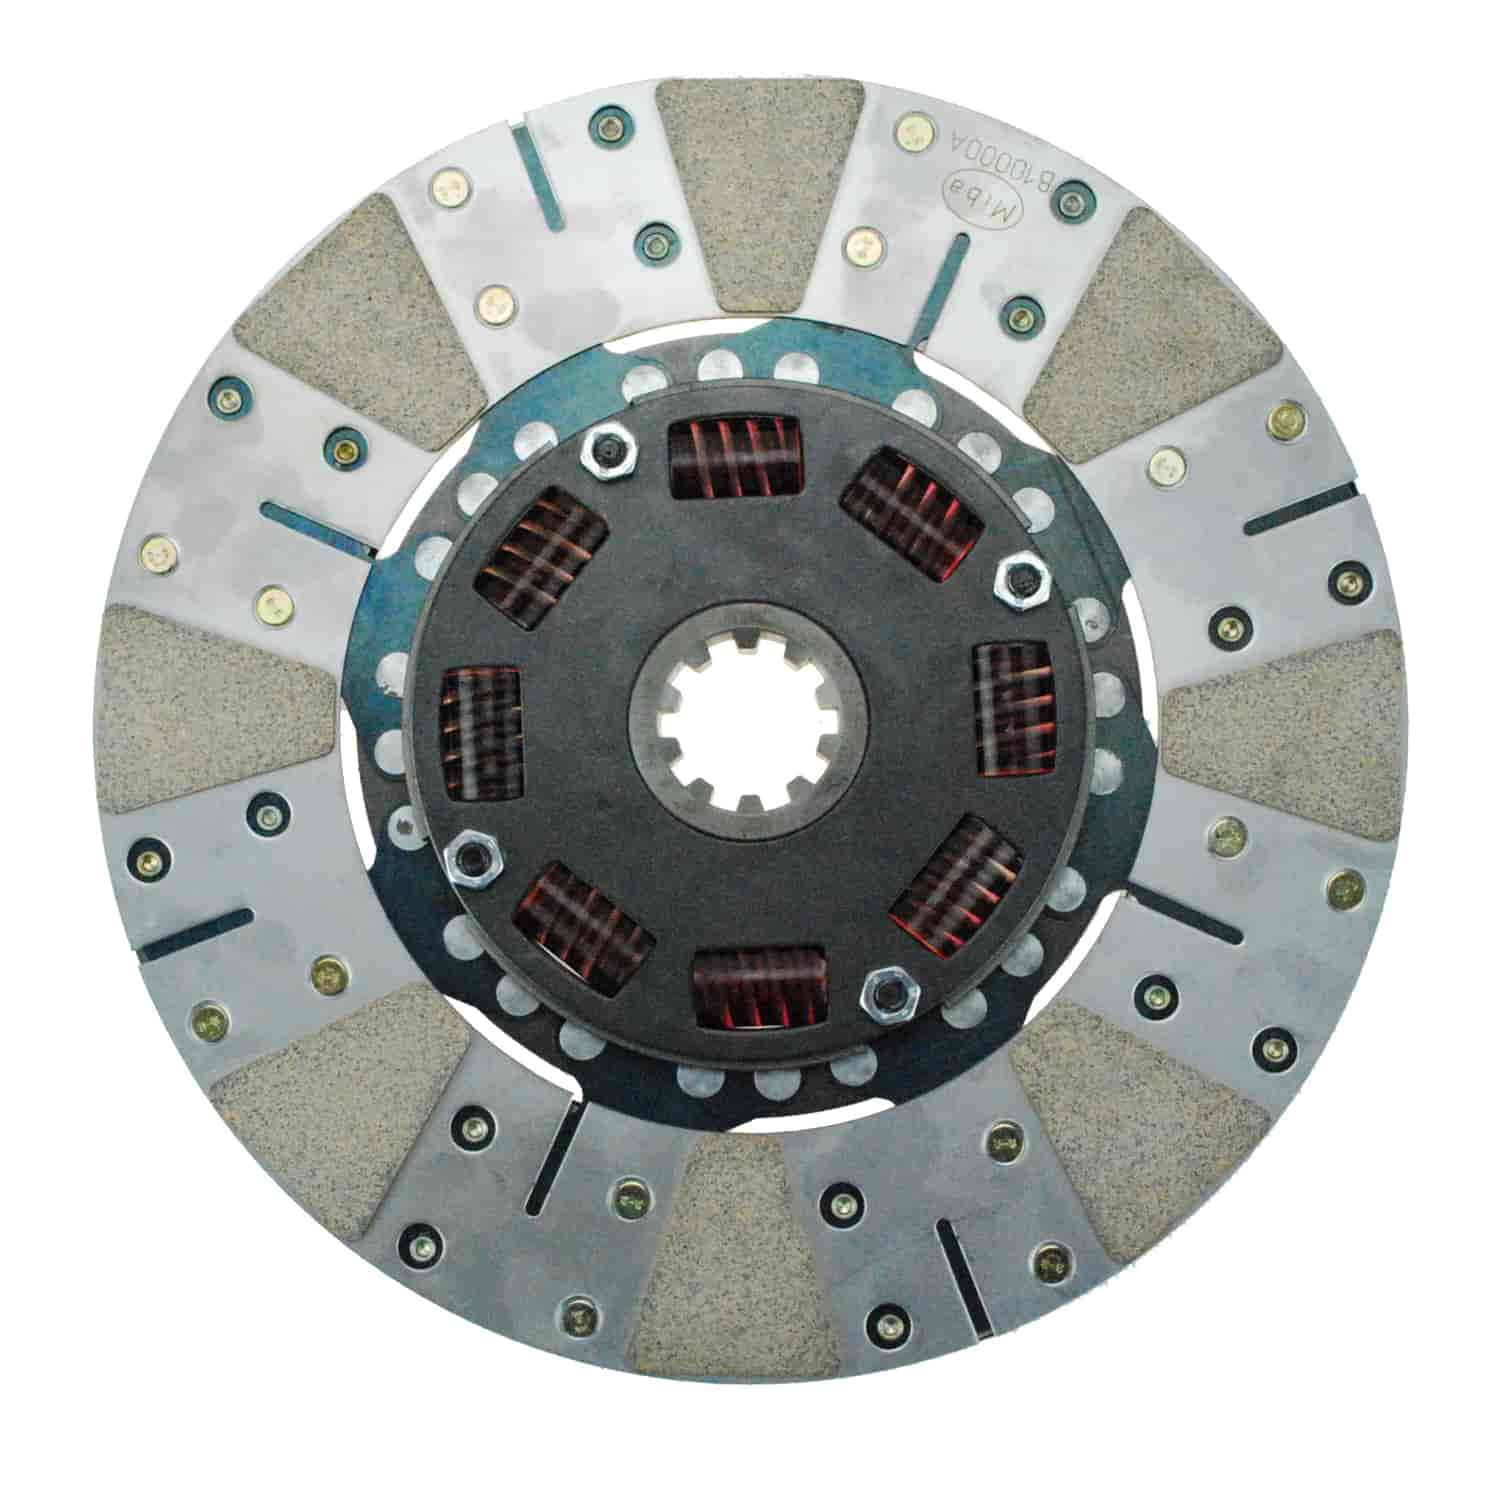 Powergrip 900/300 Series Clutch Disc 10-1/2" Diameter